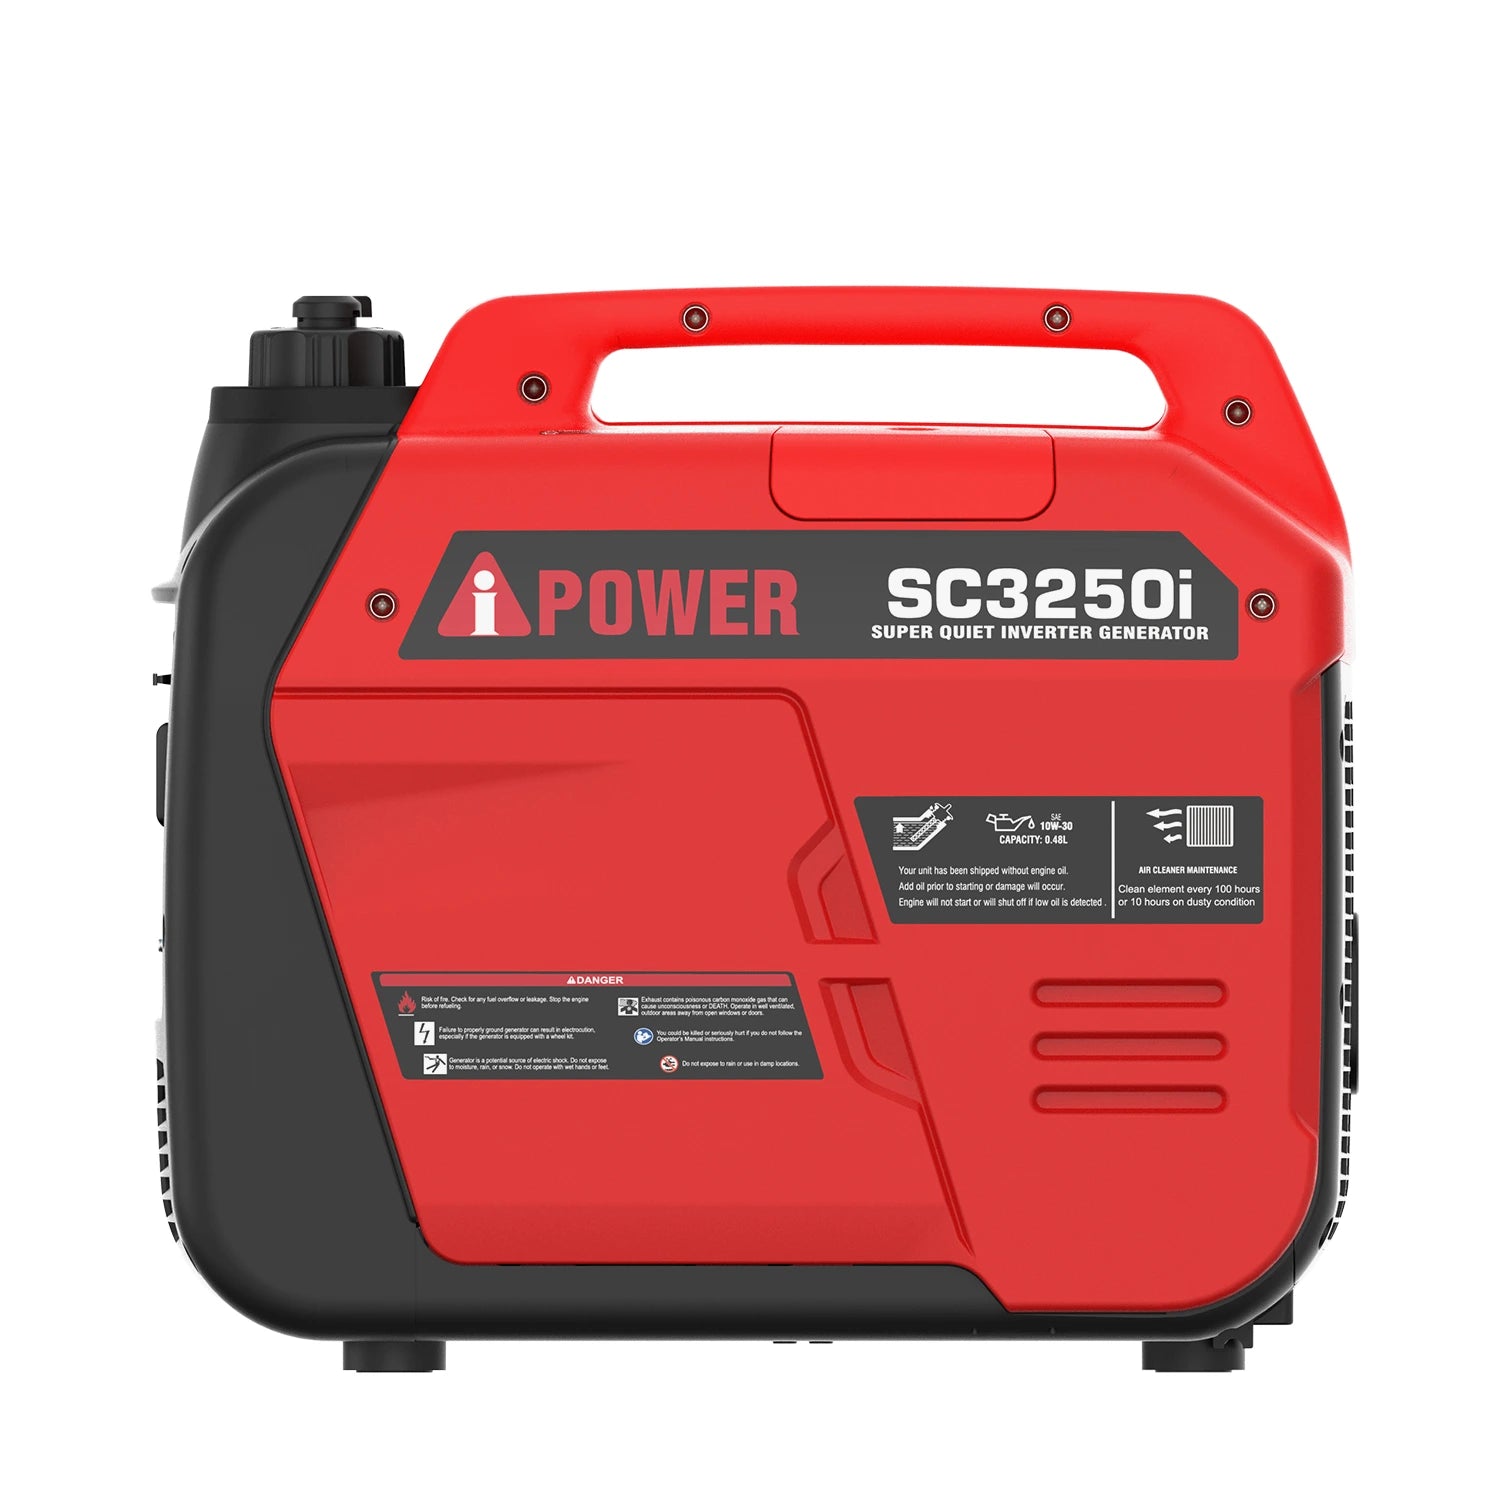 3200W A-iPower Inverter Generator Gasoline SC3250i